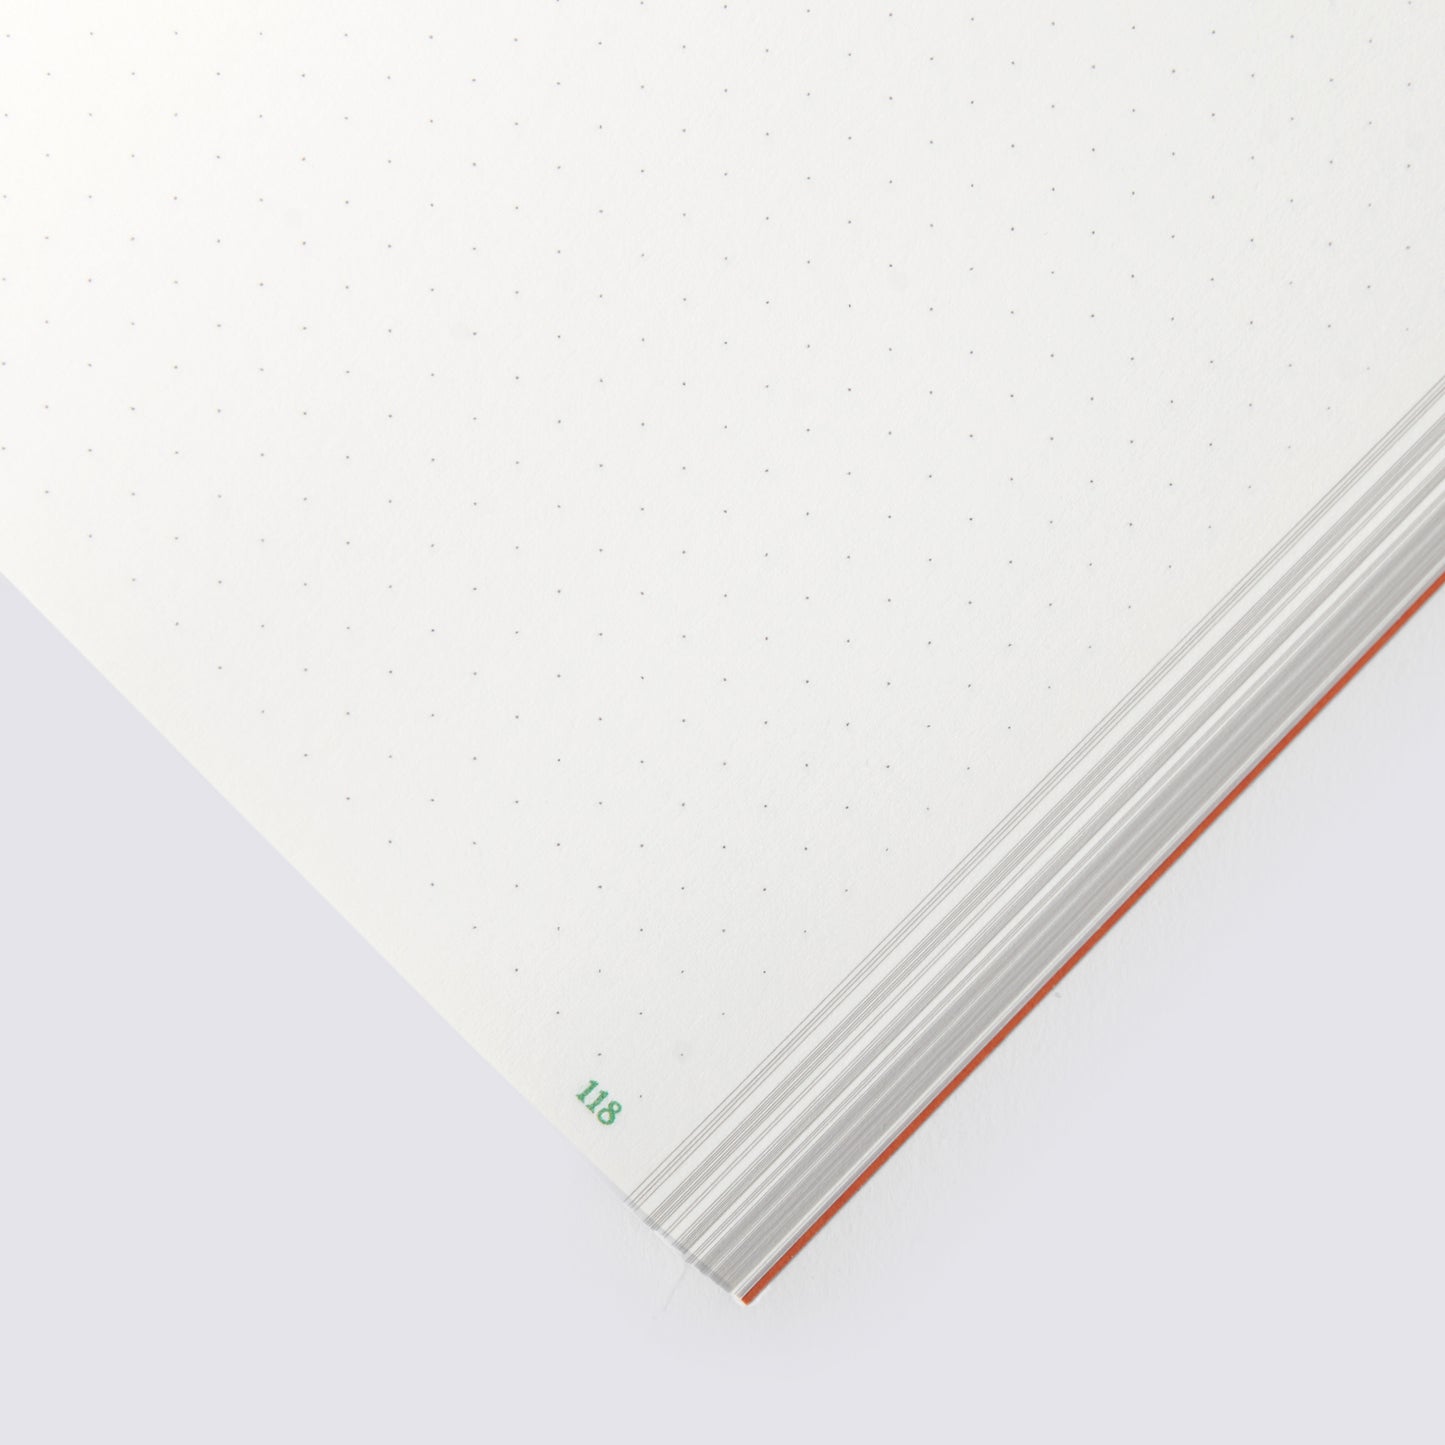 Marais Notebook and Pen Duo - Primo Gel Pen / Dot Grid Paper